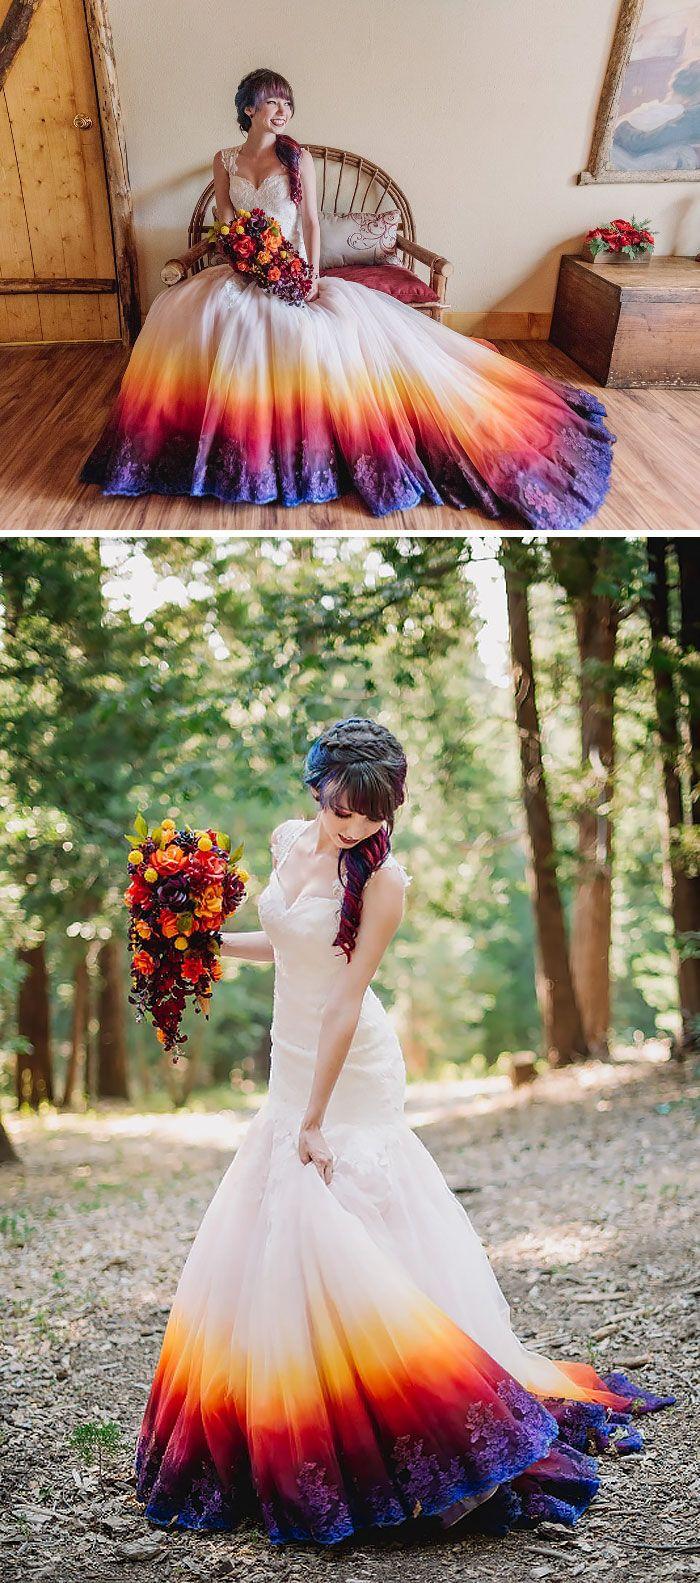 زفاف - Dip Dye Wedding Dress Trend Will Make Your Big Day More Colorful